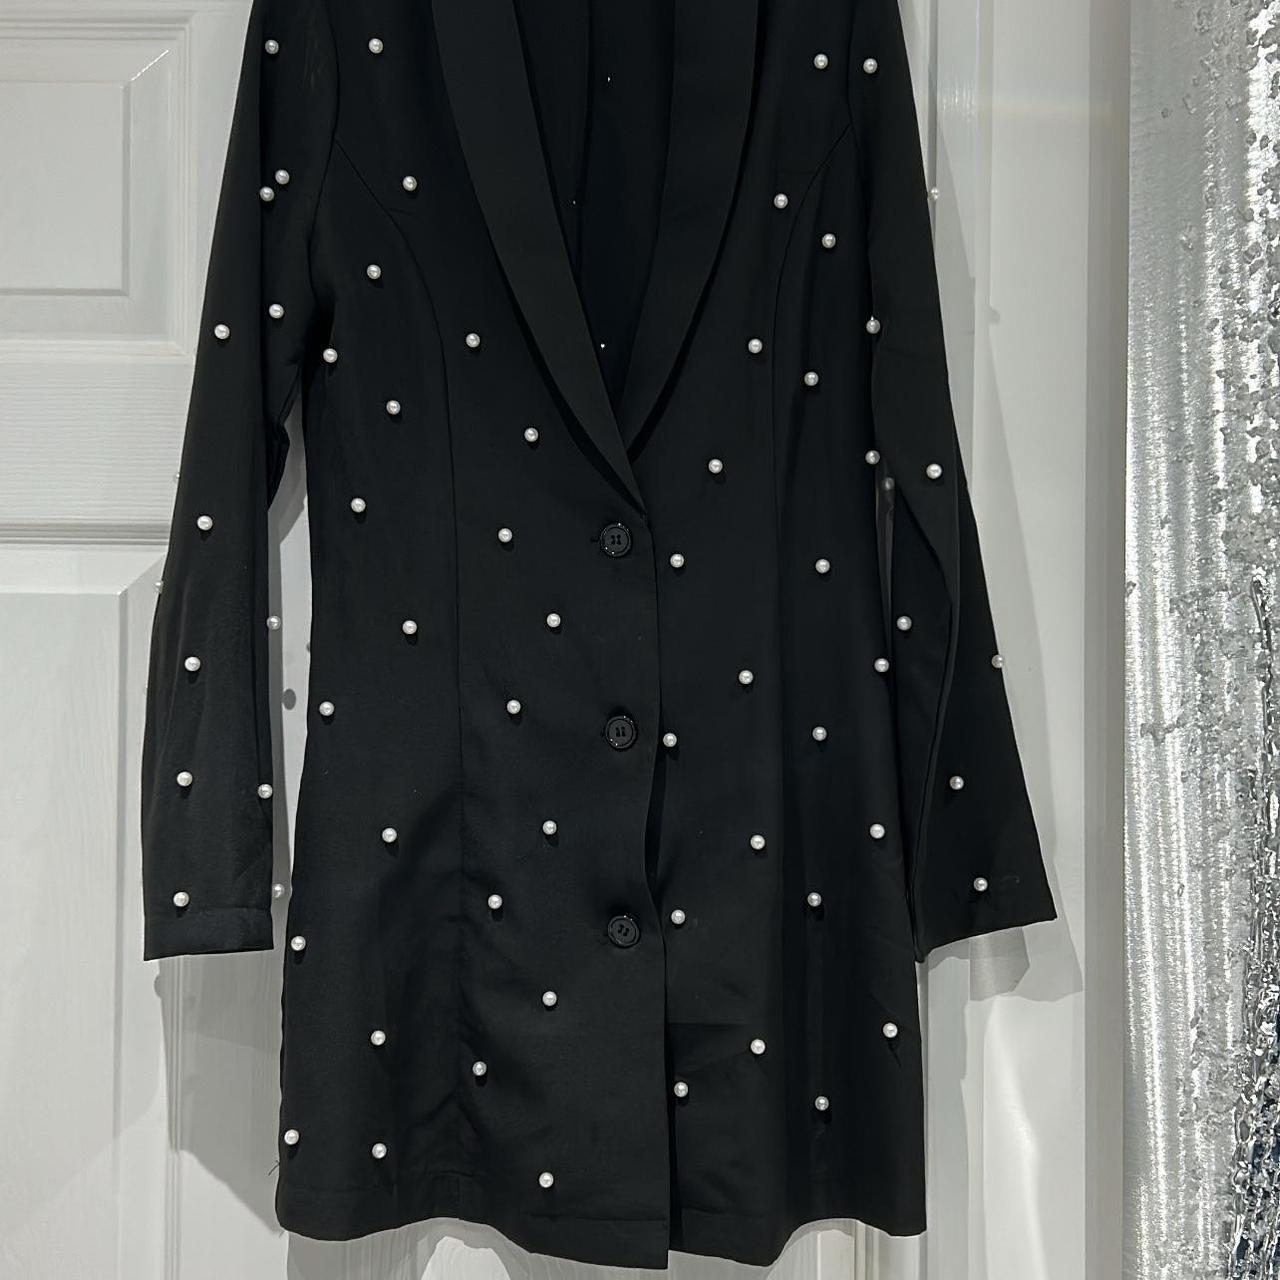 Saint Genies pearl embellished blazer dress in black